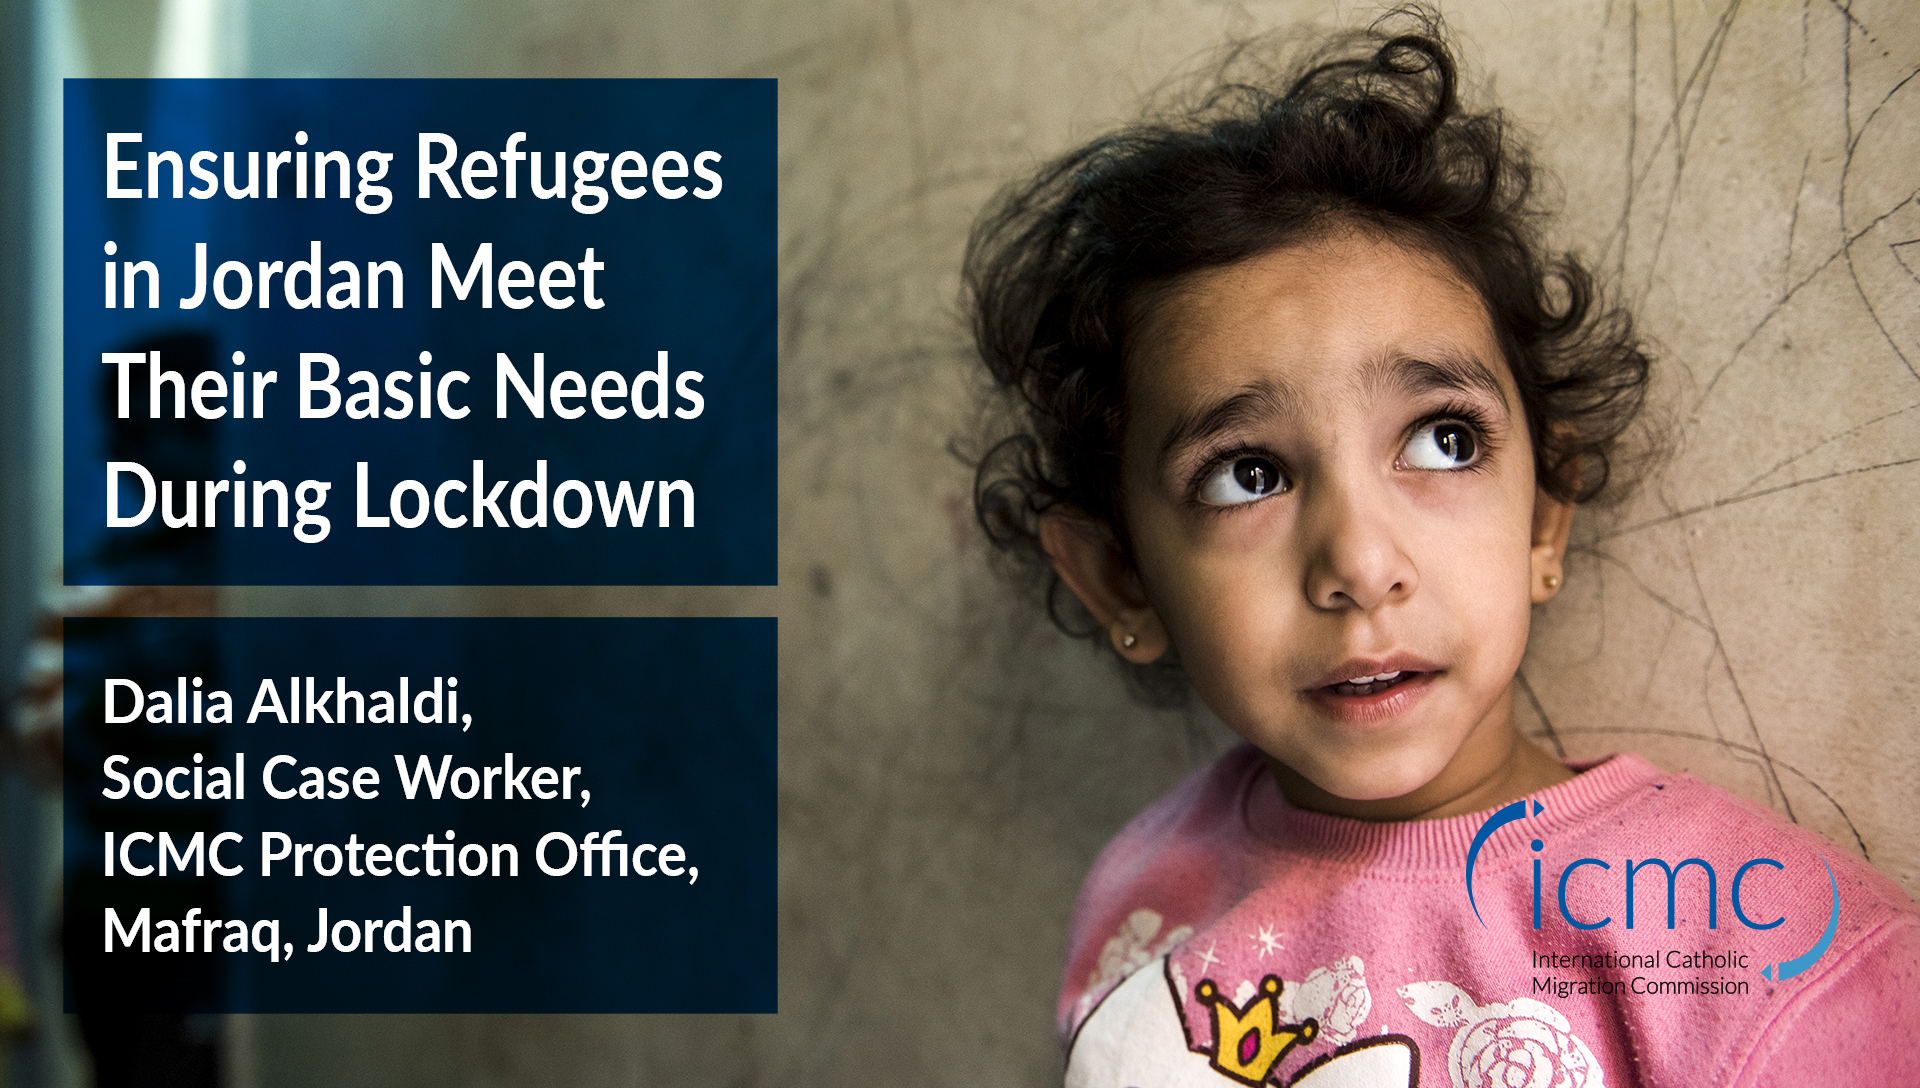 Refugees in Jordan Meet Their Basic Needs During Lockdown - The International Catholic Migration Commission (ICMC)